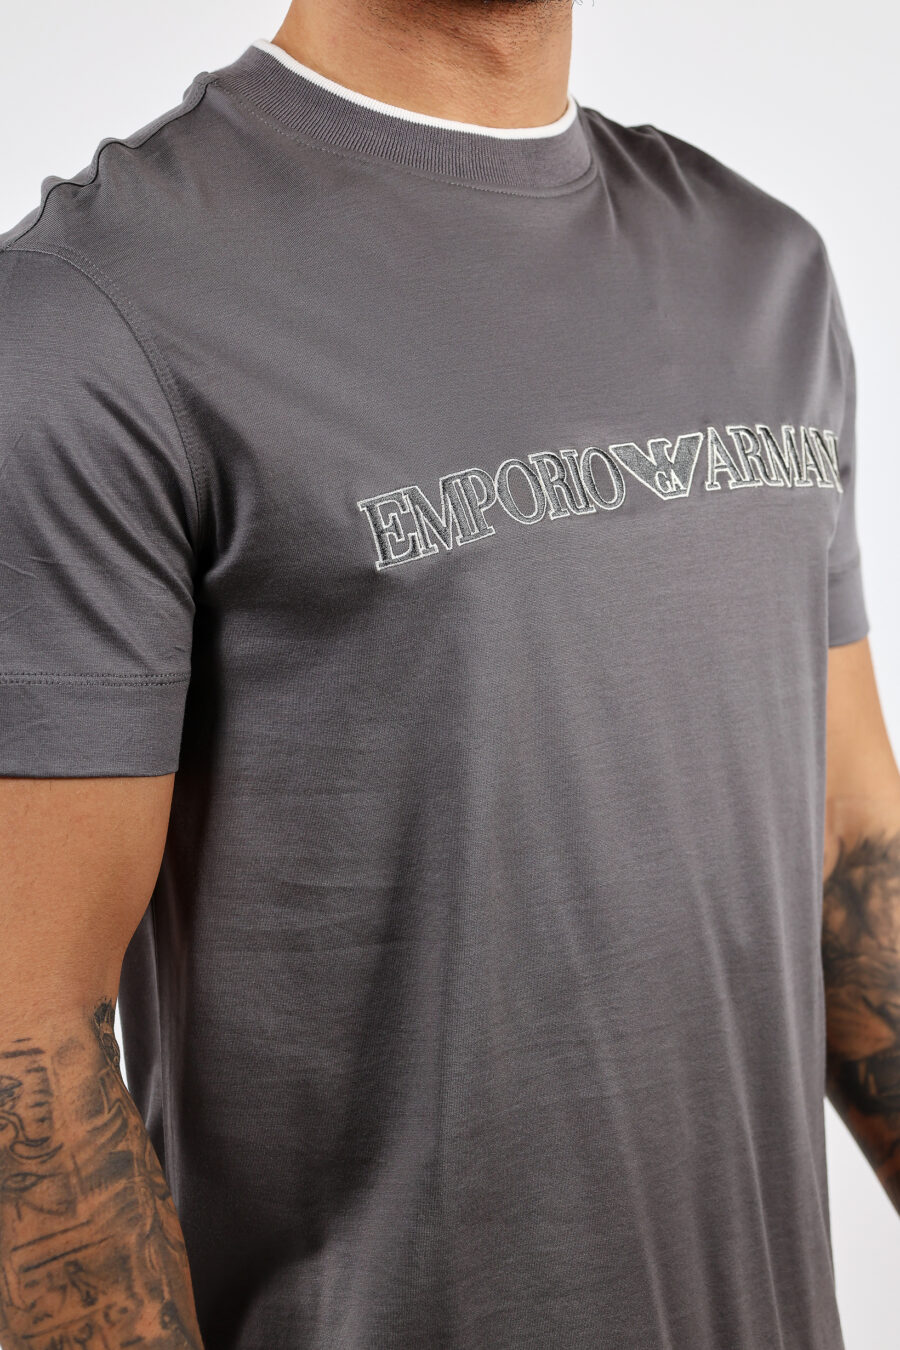 T-shirt cinzenta com logótipo "emporio" maxi - BLS Fashion 69